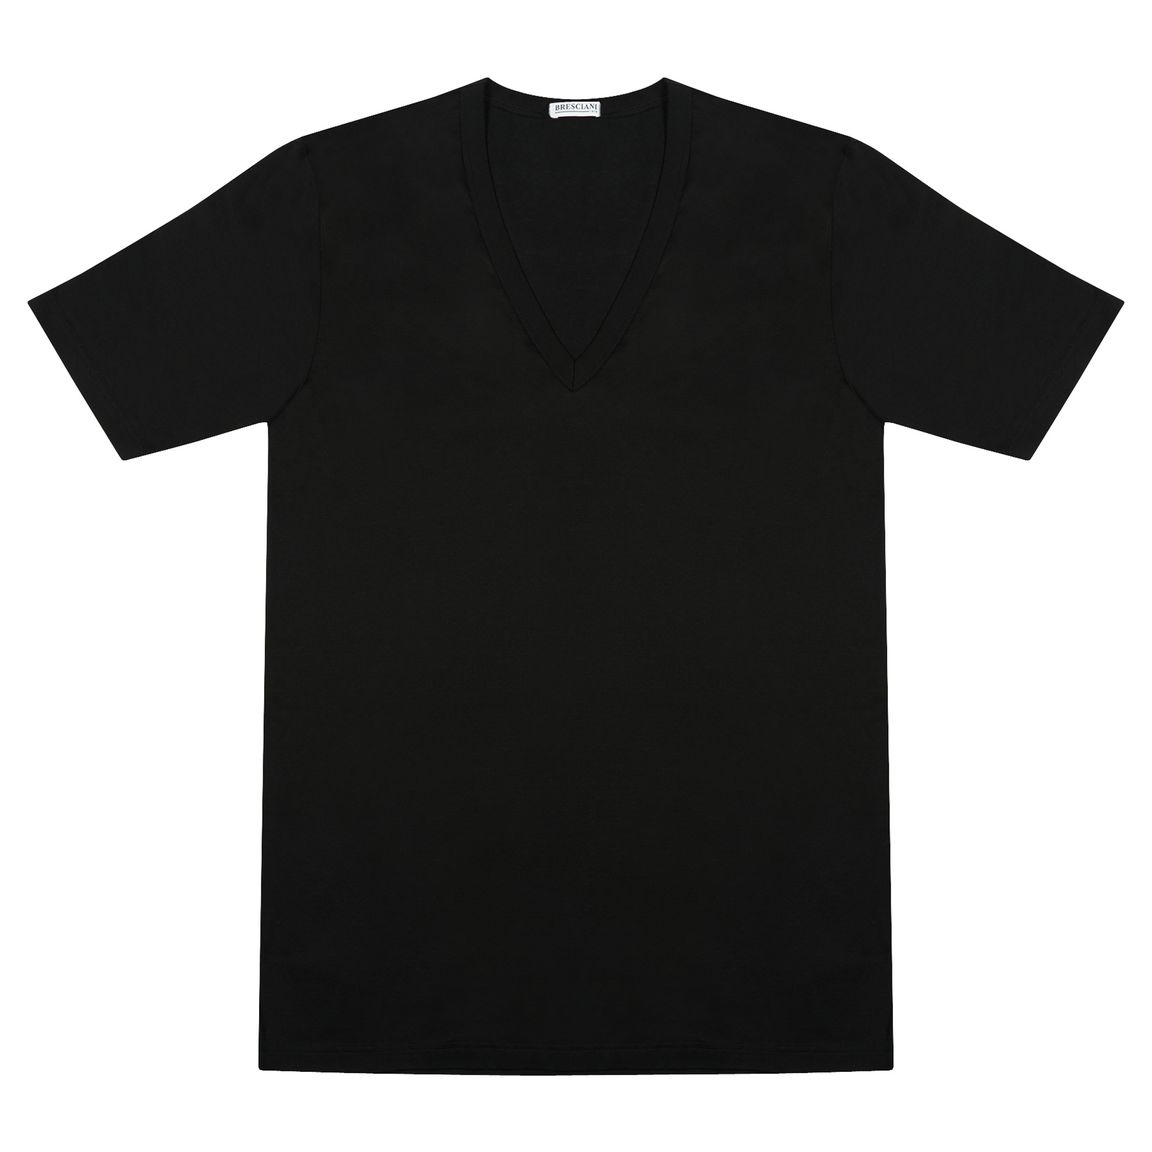 Bresciani Black V-Neck T-Shirt